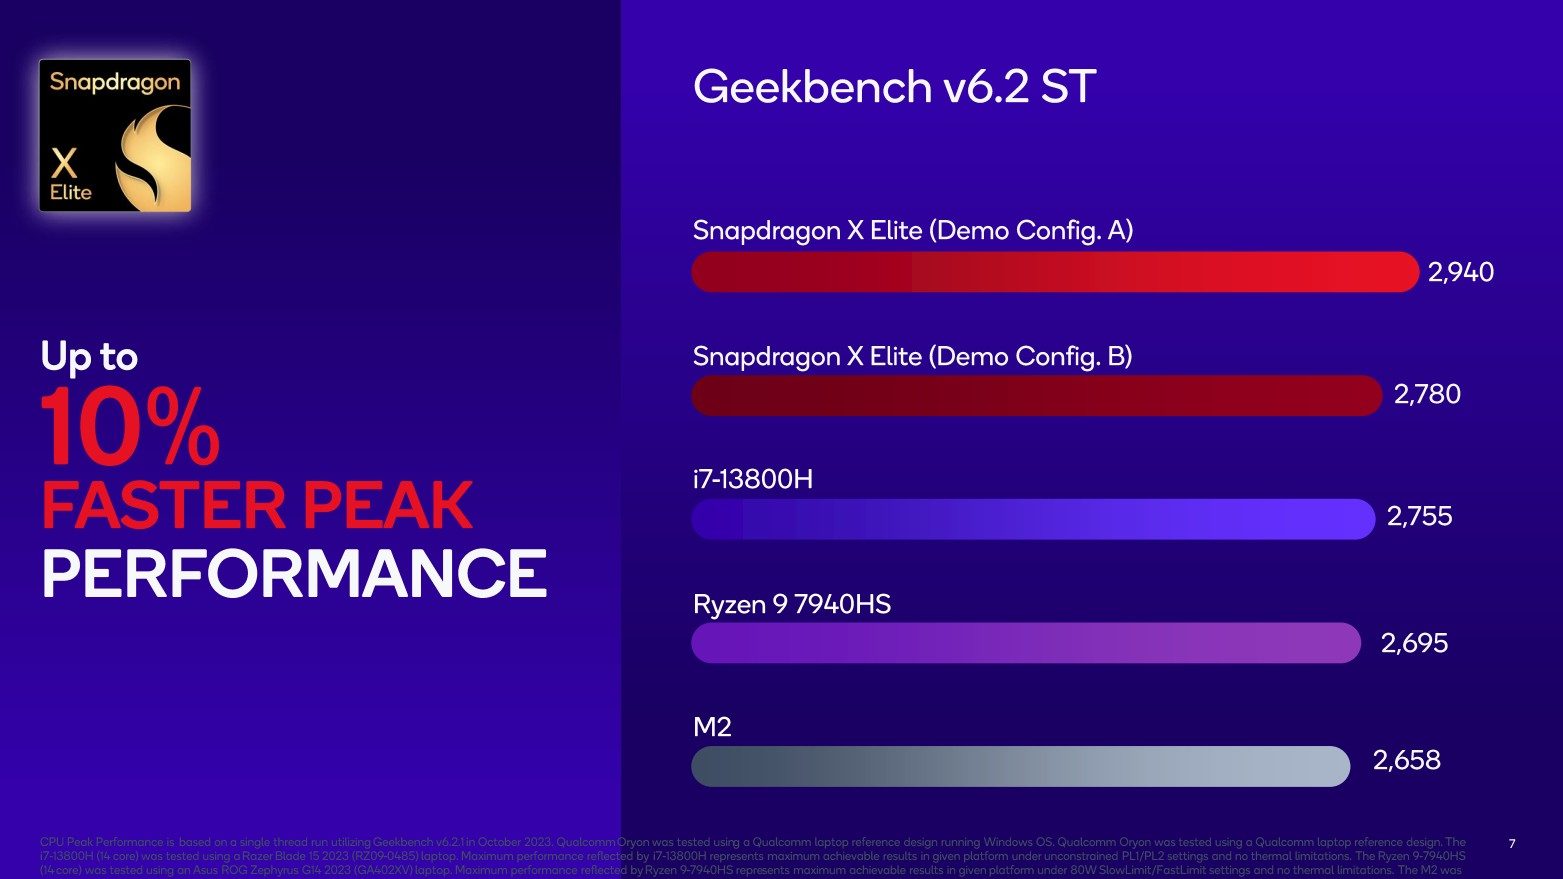 Qualcomm Snapdragon X Elite Benchmark